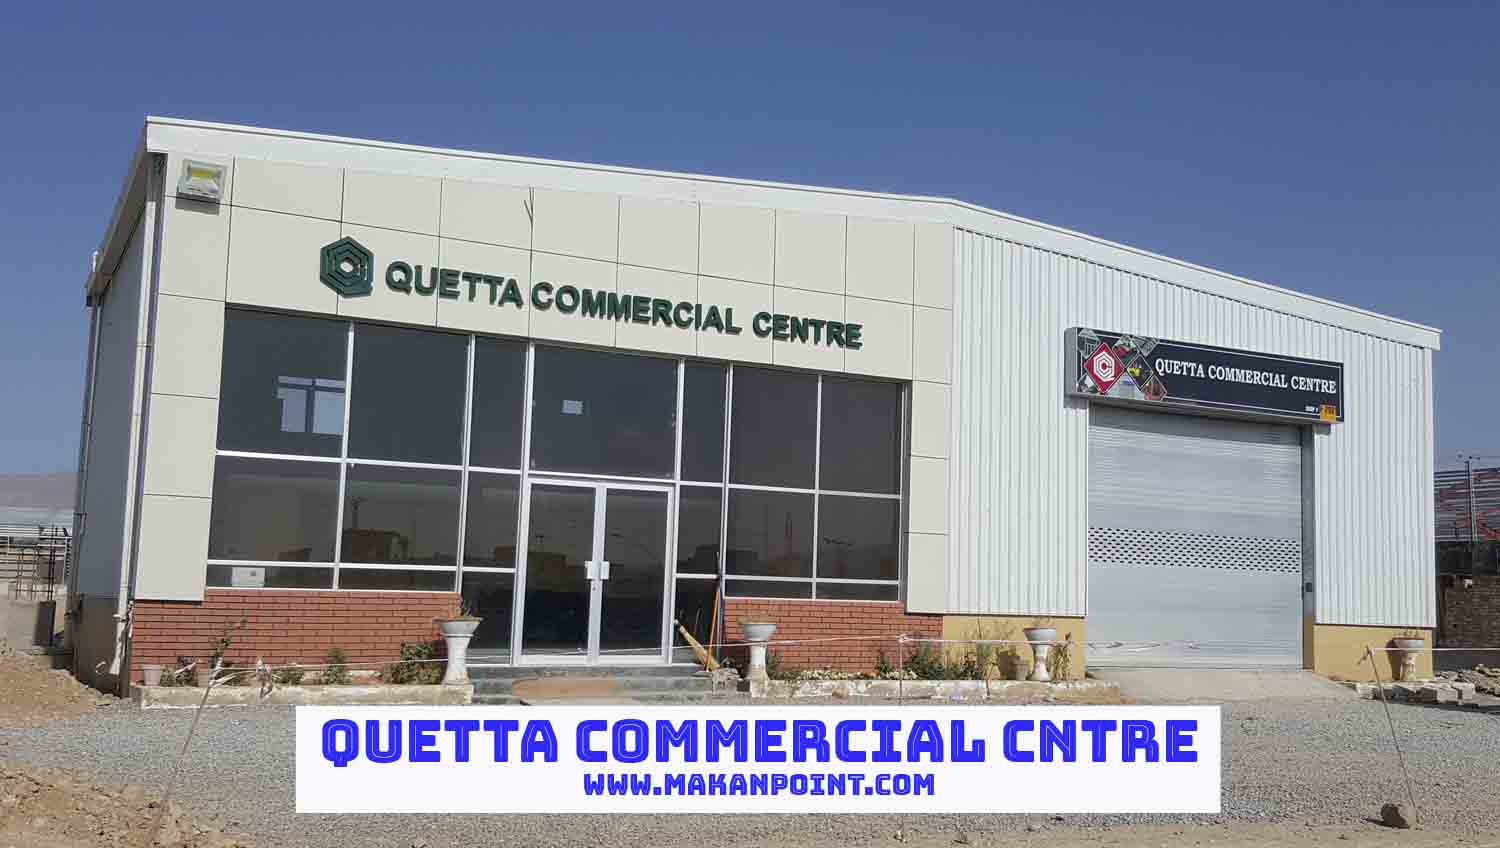 Quetta commercial centre real estate project